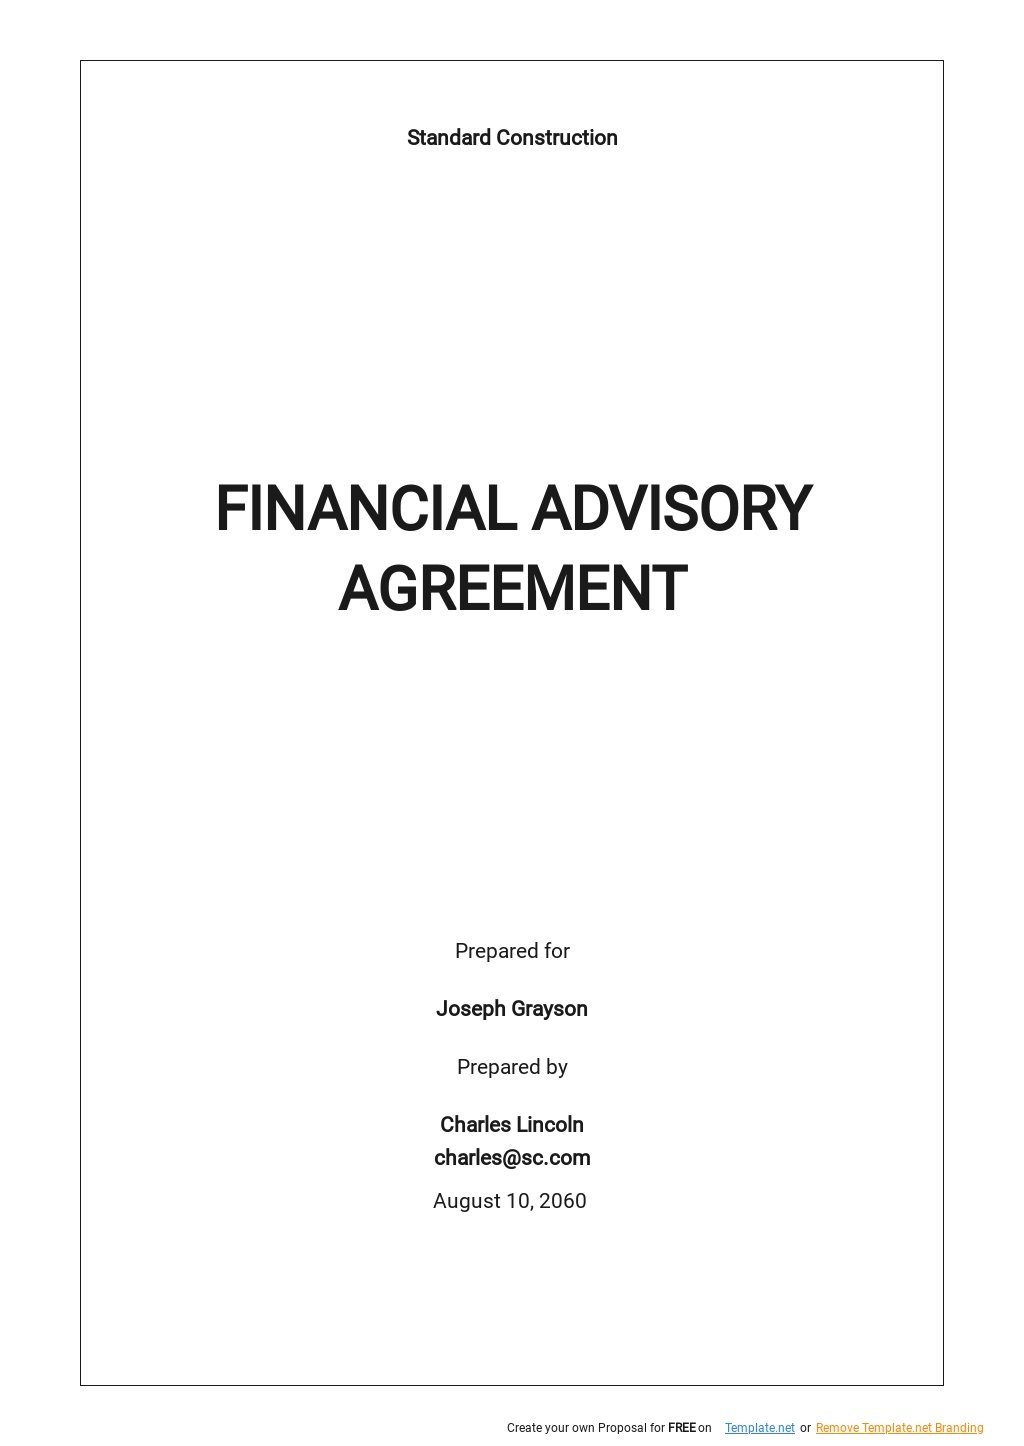 Financial Advisory Agreement Template .jpe